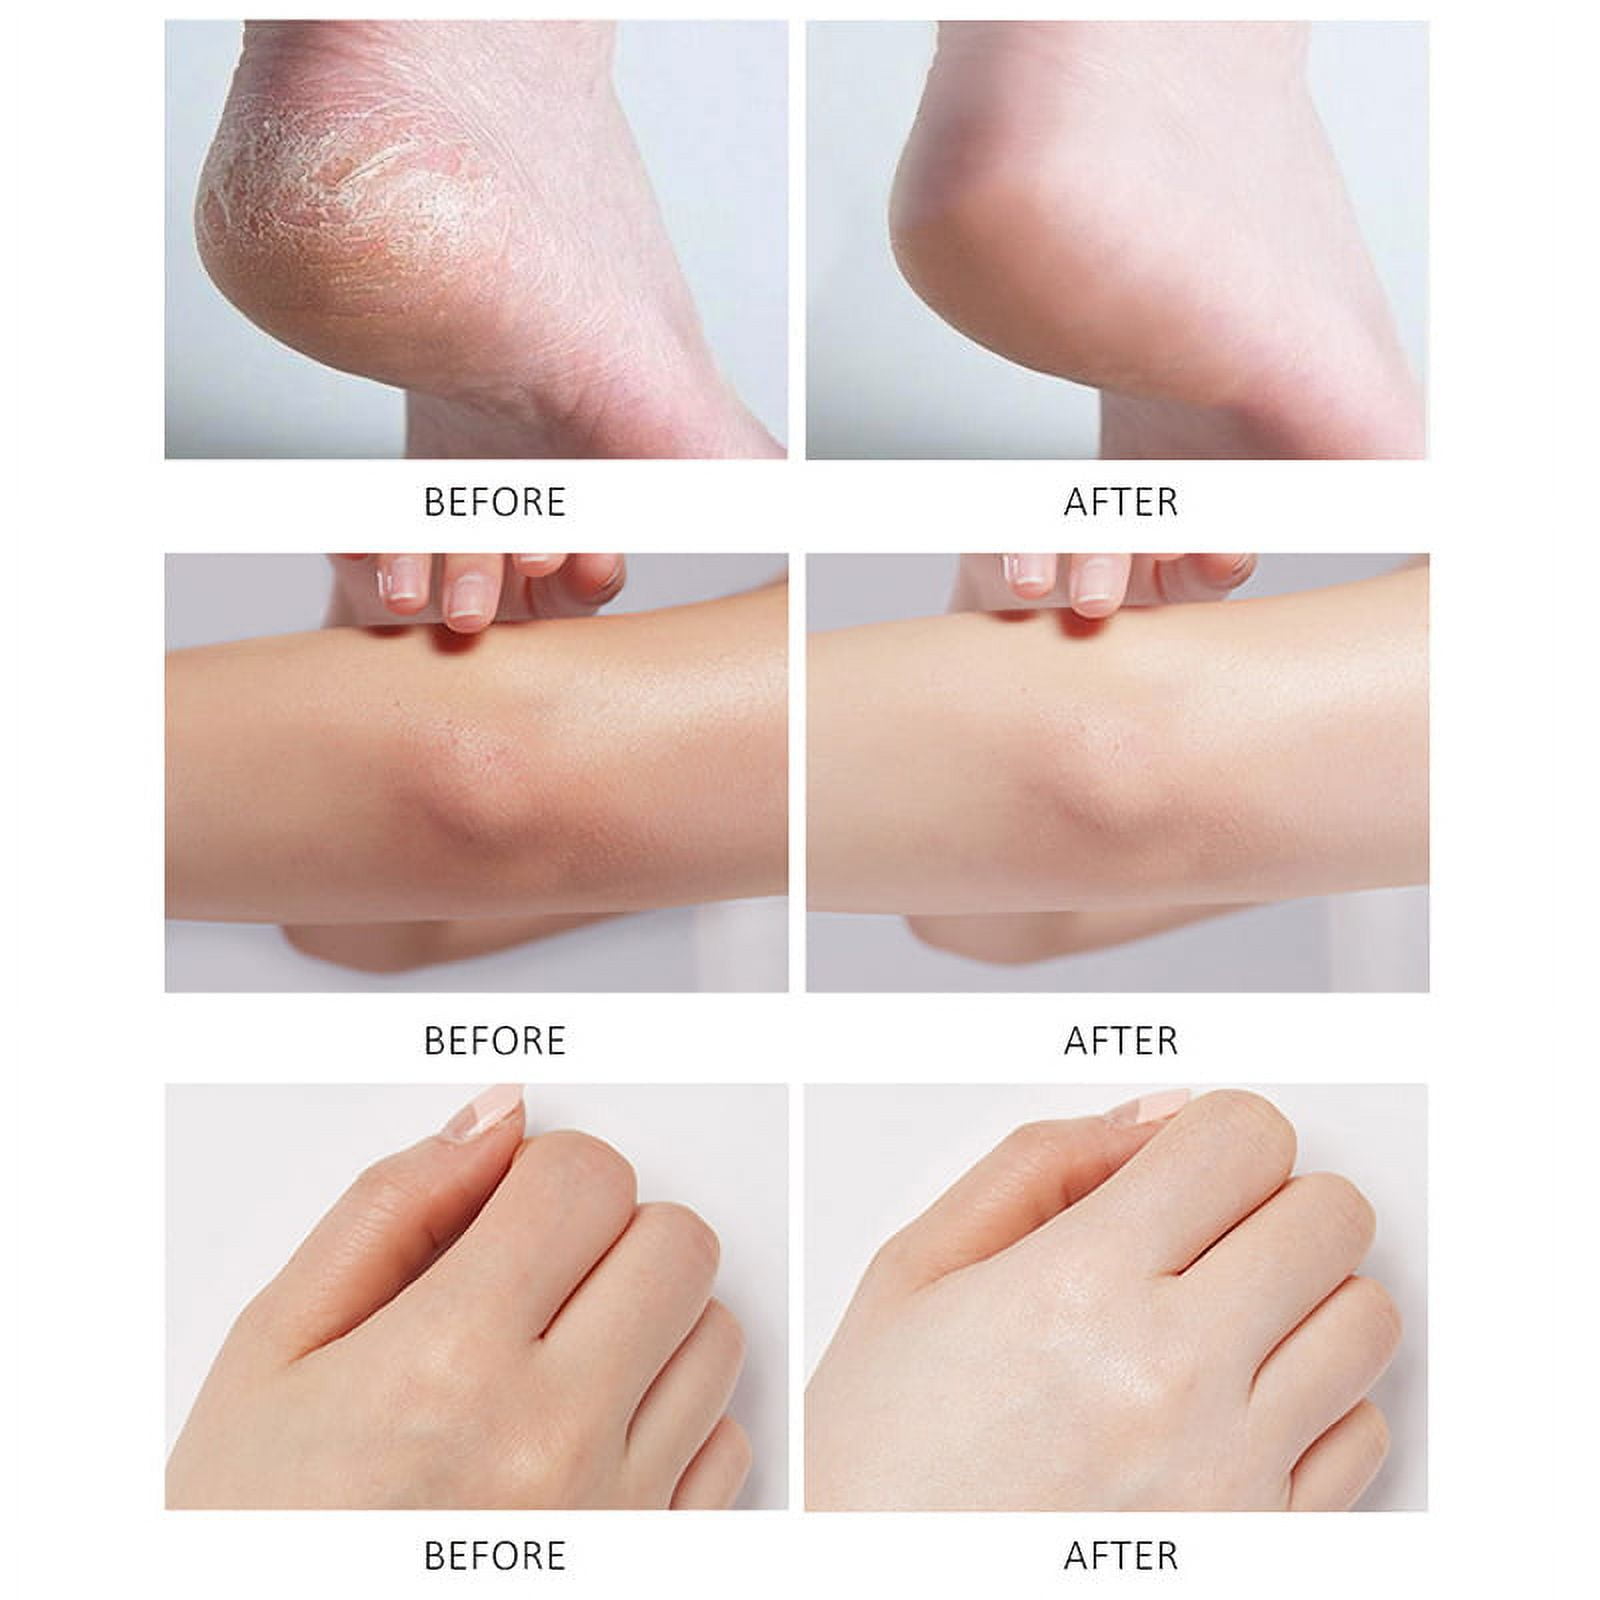 XIFEPFR Callus Remover, Foot Scrubber Dead Skin Remover, Exfoliating Foot  Spray, Spa Pedicure Treatment with Foot File, Cracked Heel Repair Cream